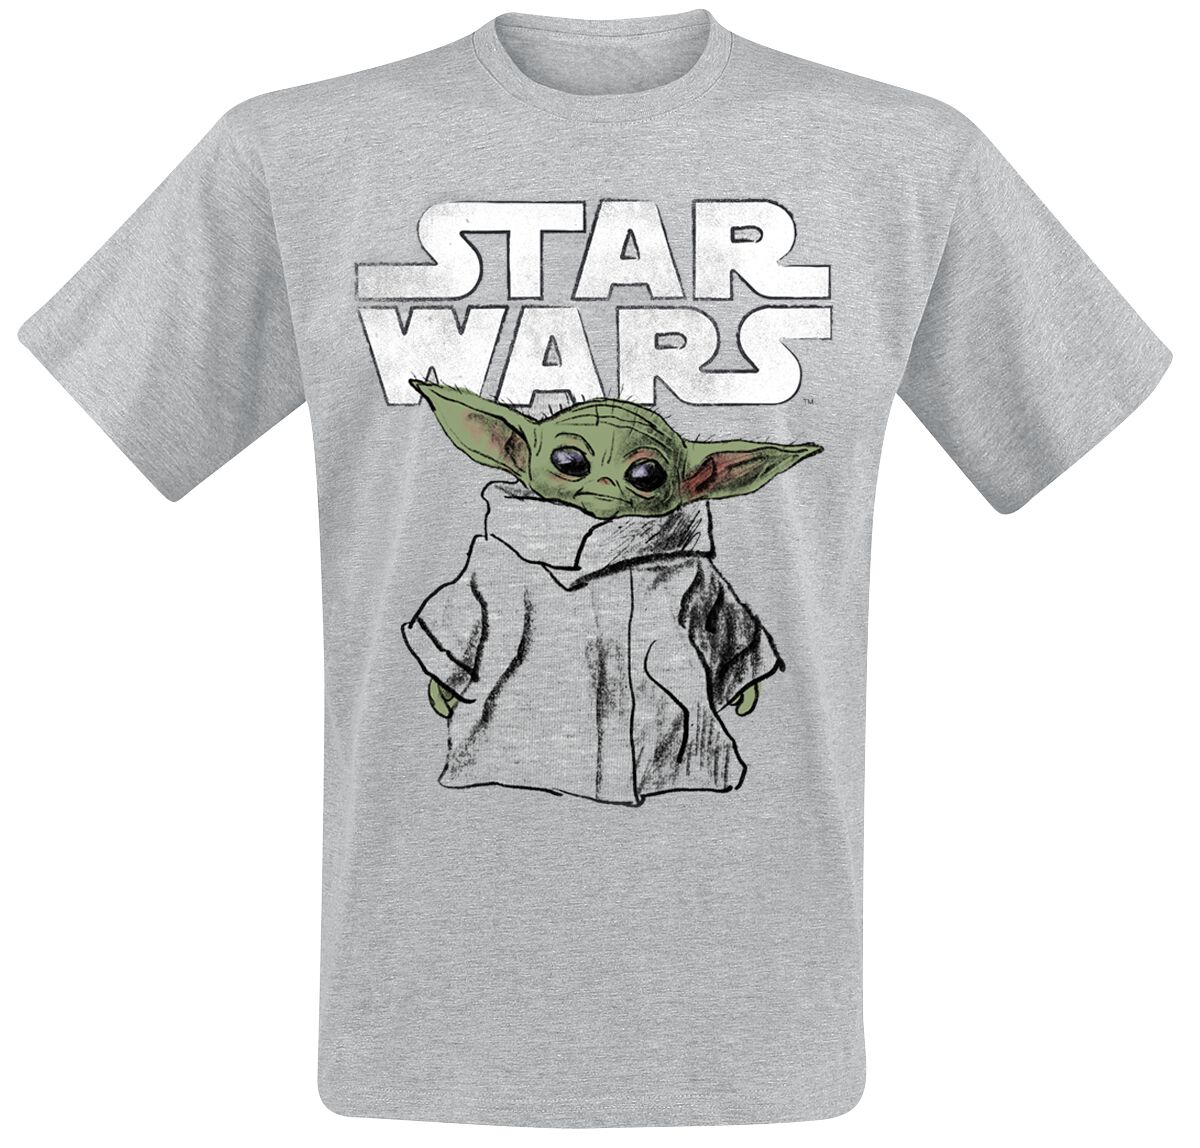 Star Wars T-Shirt - The Mandalorian - Grogu - Sketch - S bis 4XL - für Männer - Größe M - grau meliert  - Lizenzierter Fanartikel